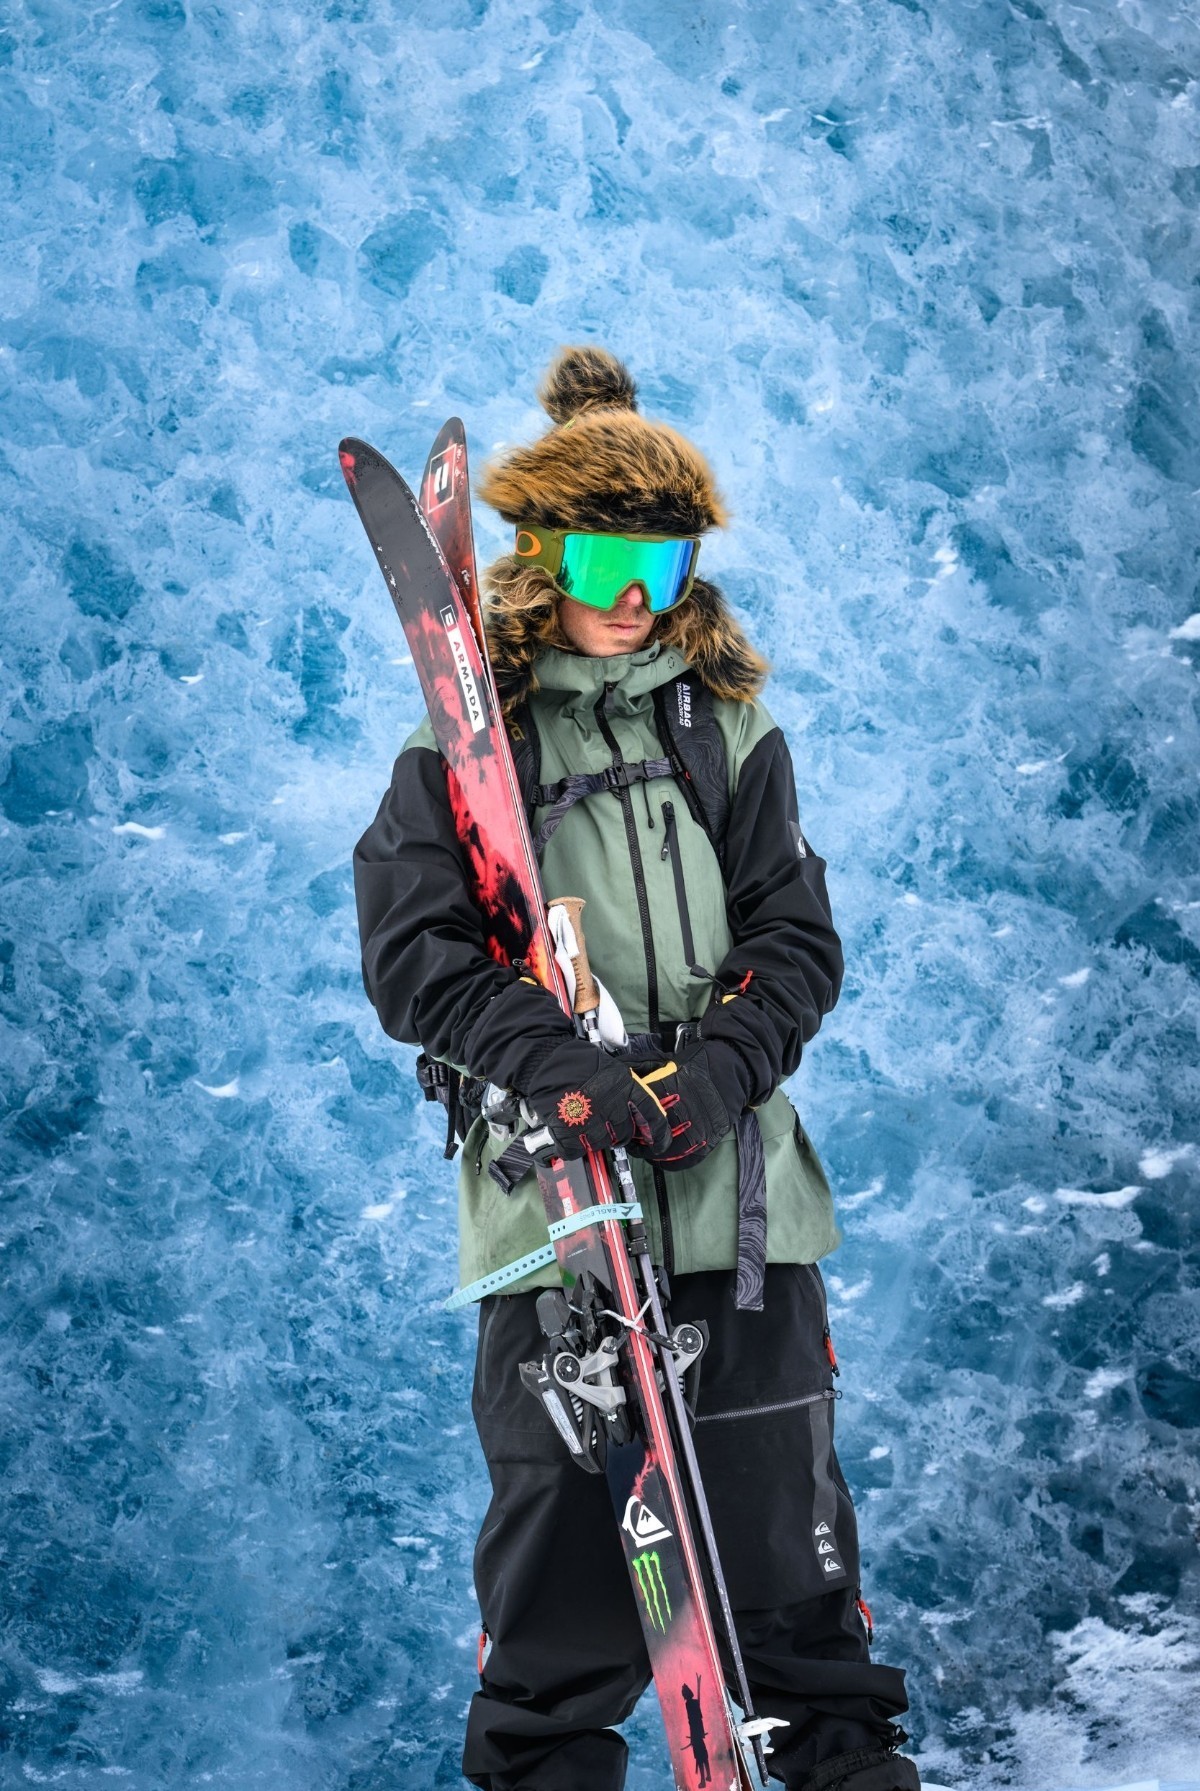 Quiksilver - Sherpa - Masque de ski - Noir